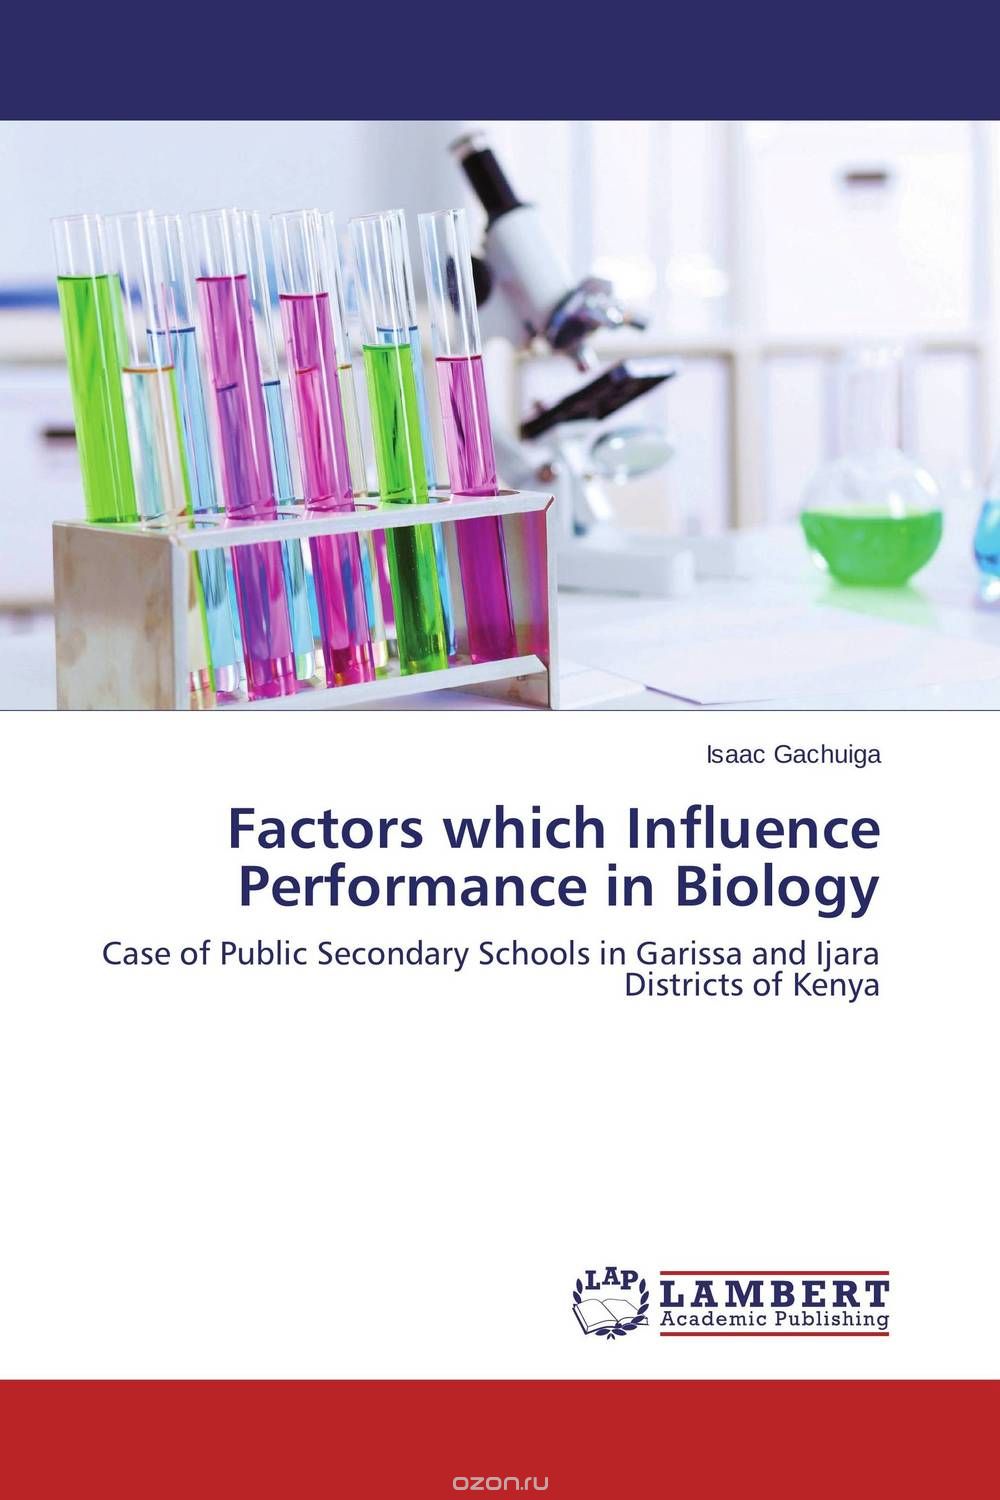 Скачать книгу "Factors which Influence Performance in Biology"